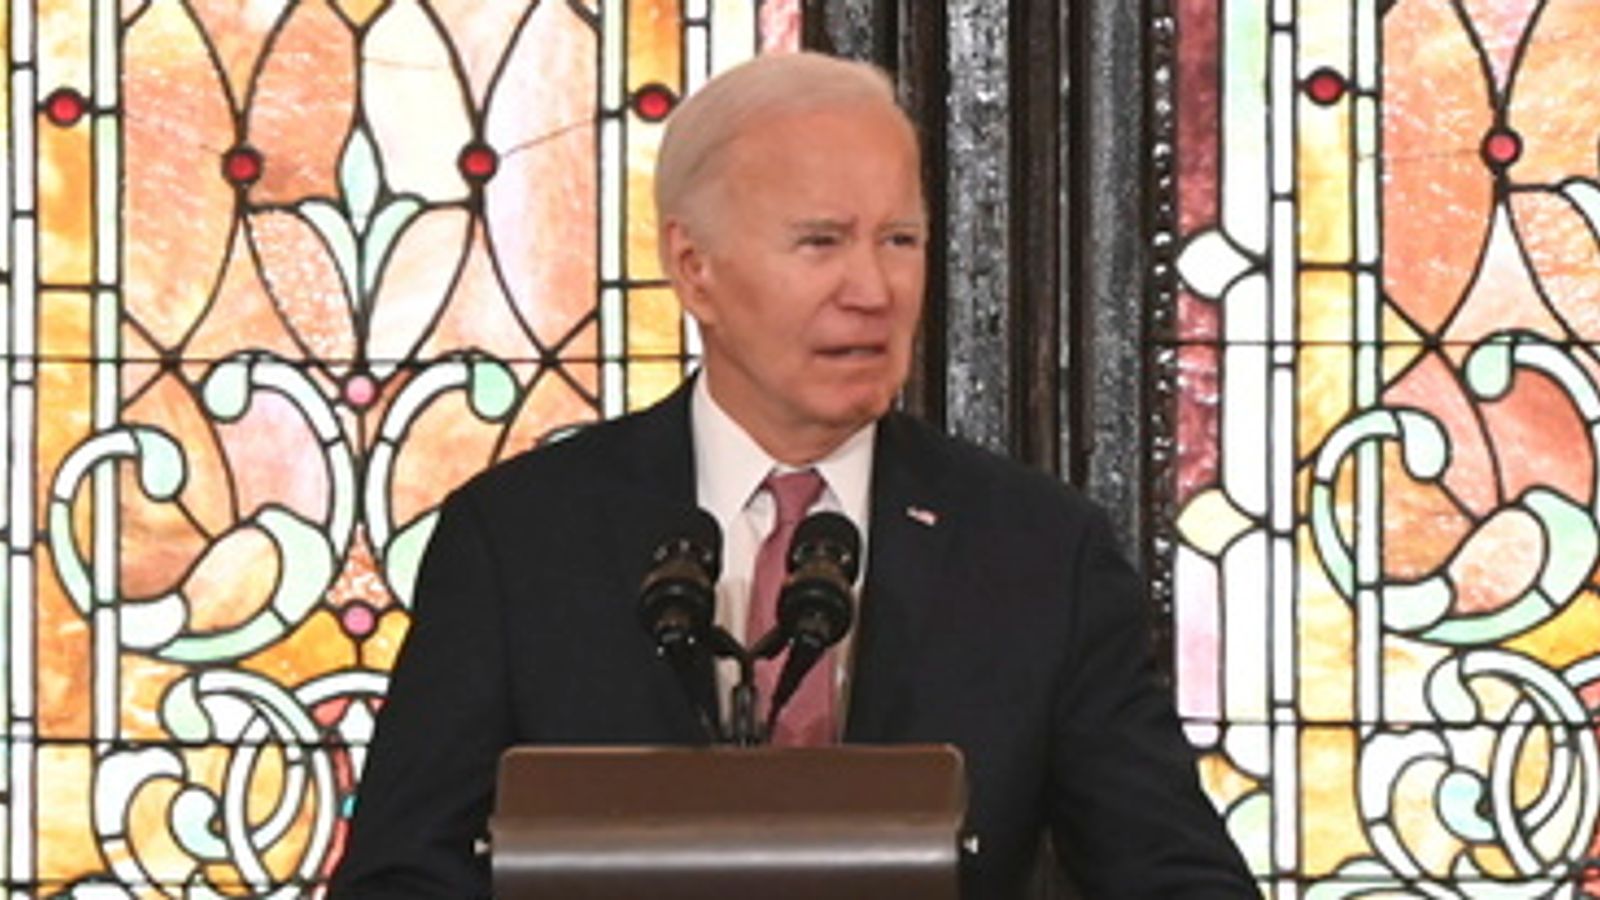 Joe Biden's church speech interrupted by pro-Palestinian protesters demanding 'ceasefire now'